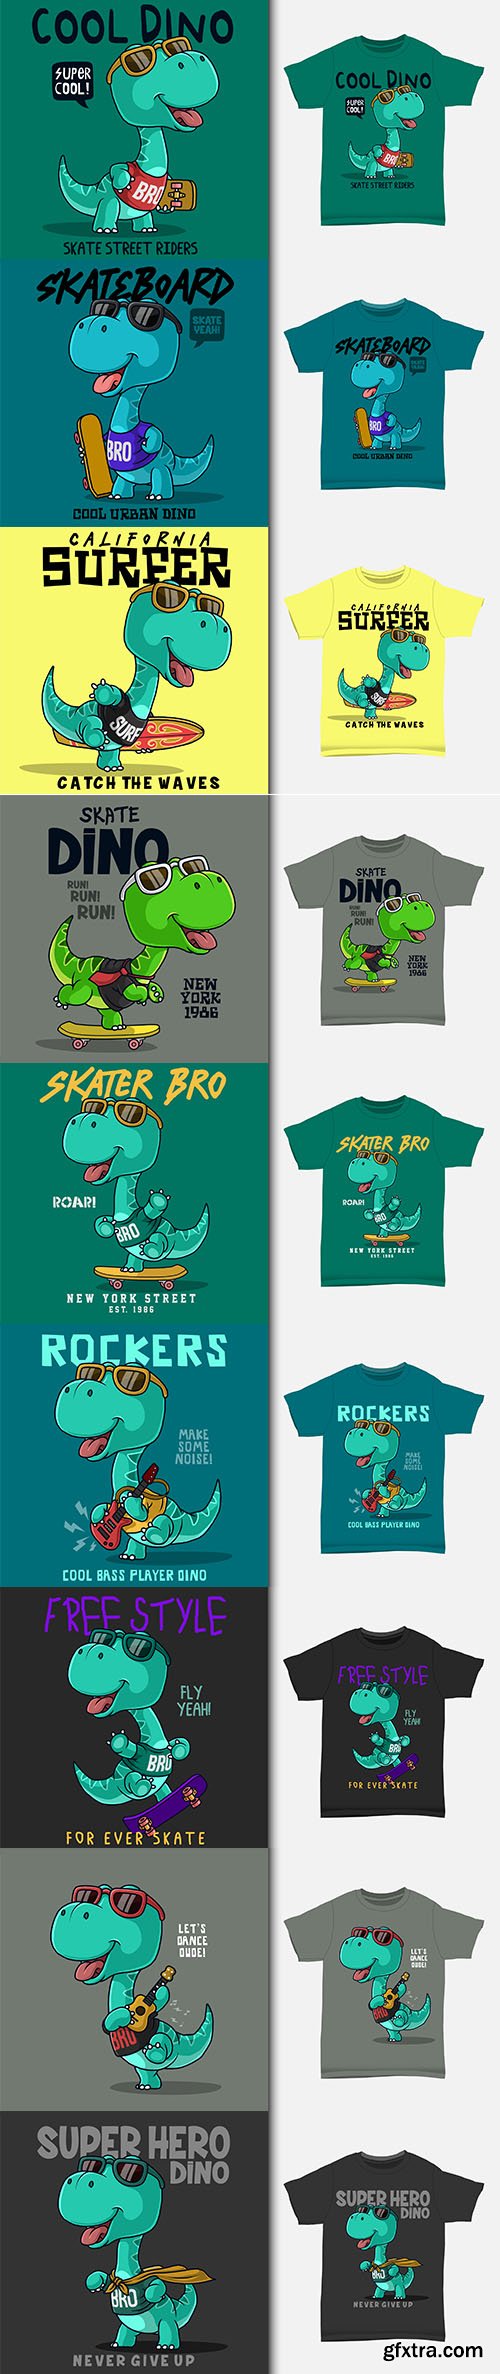 Dinosaur super hero cartoon t-shirt design